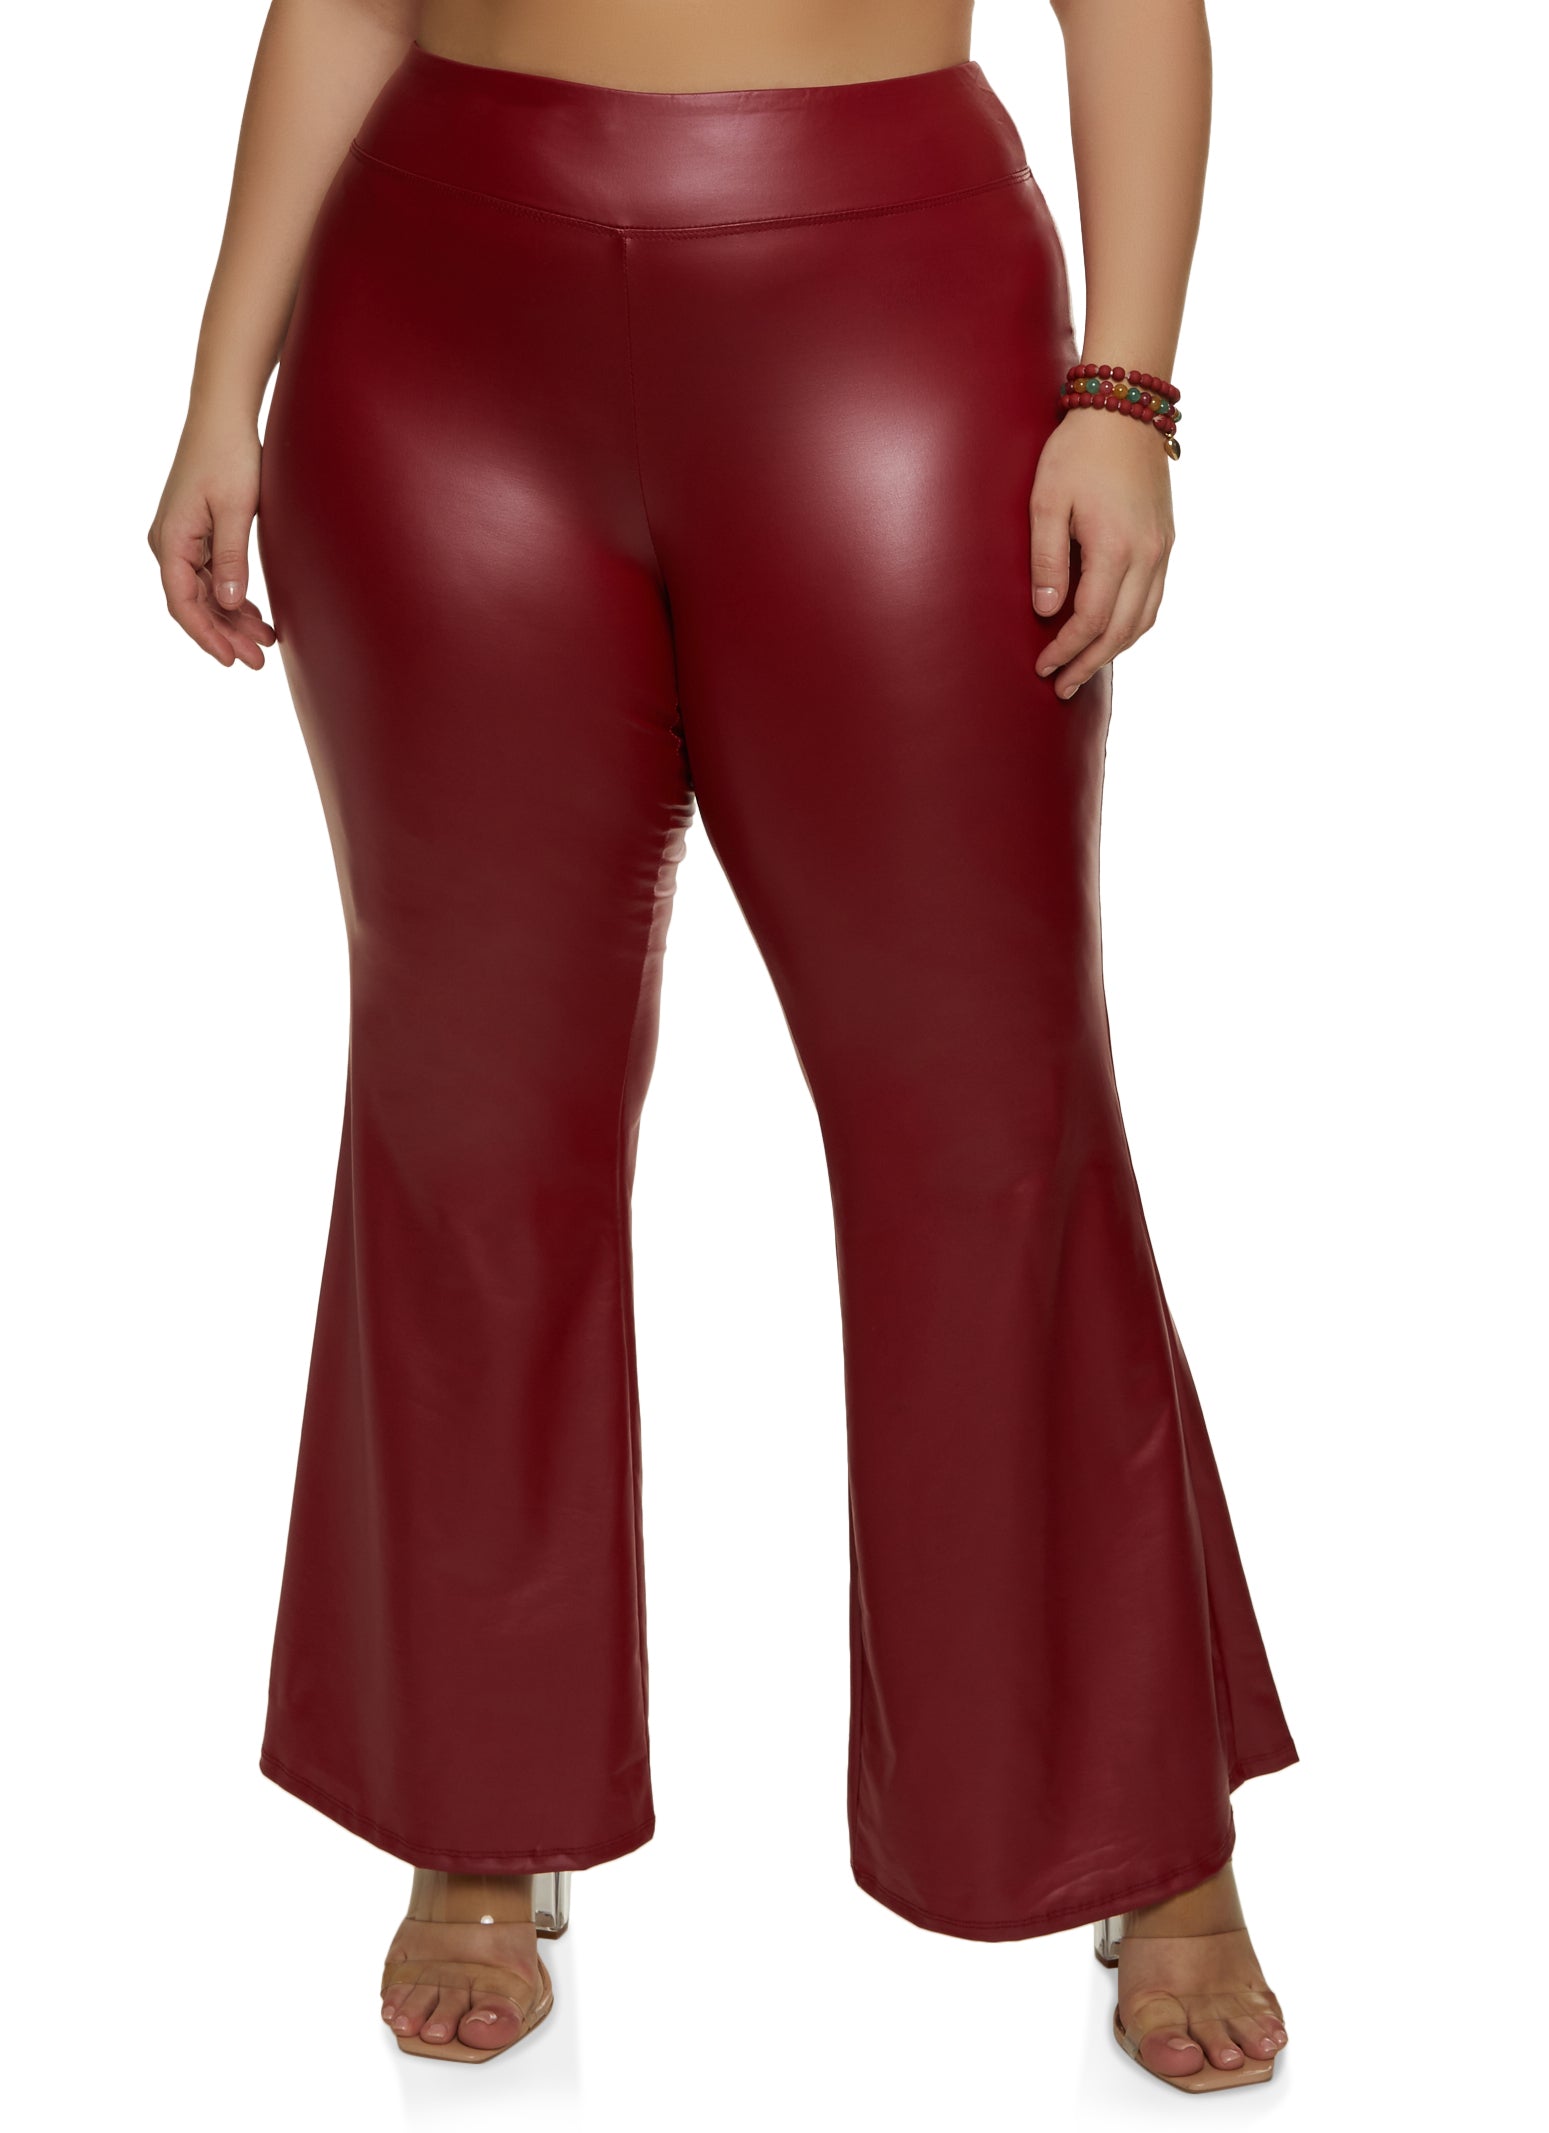 DESTRB Melody Red Leather Pants Burgundy Plus Size Seamless